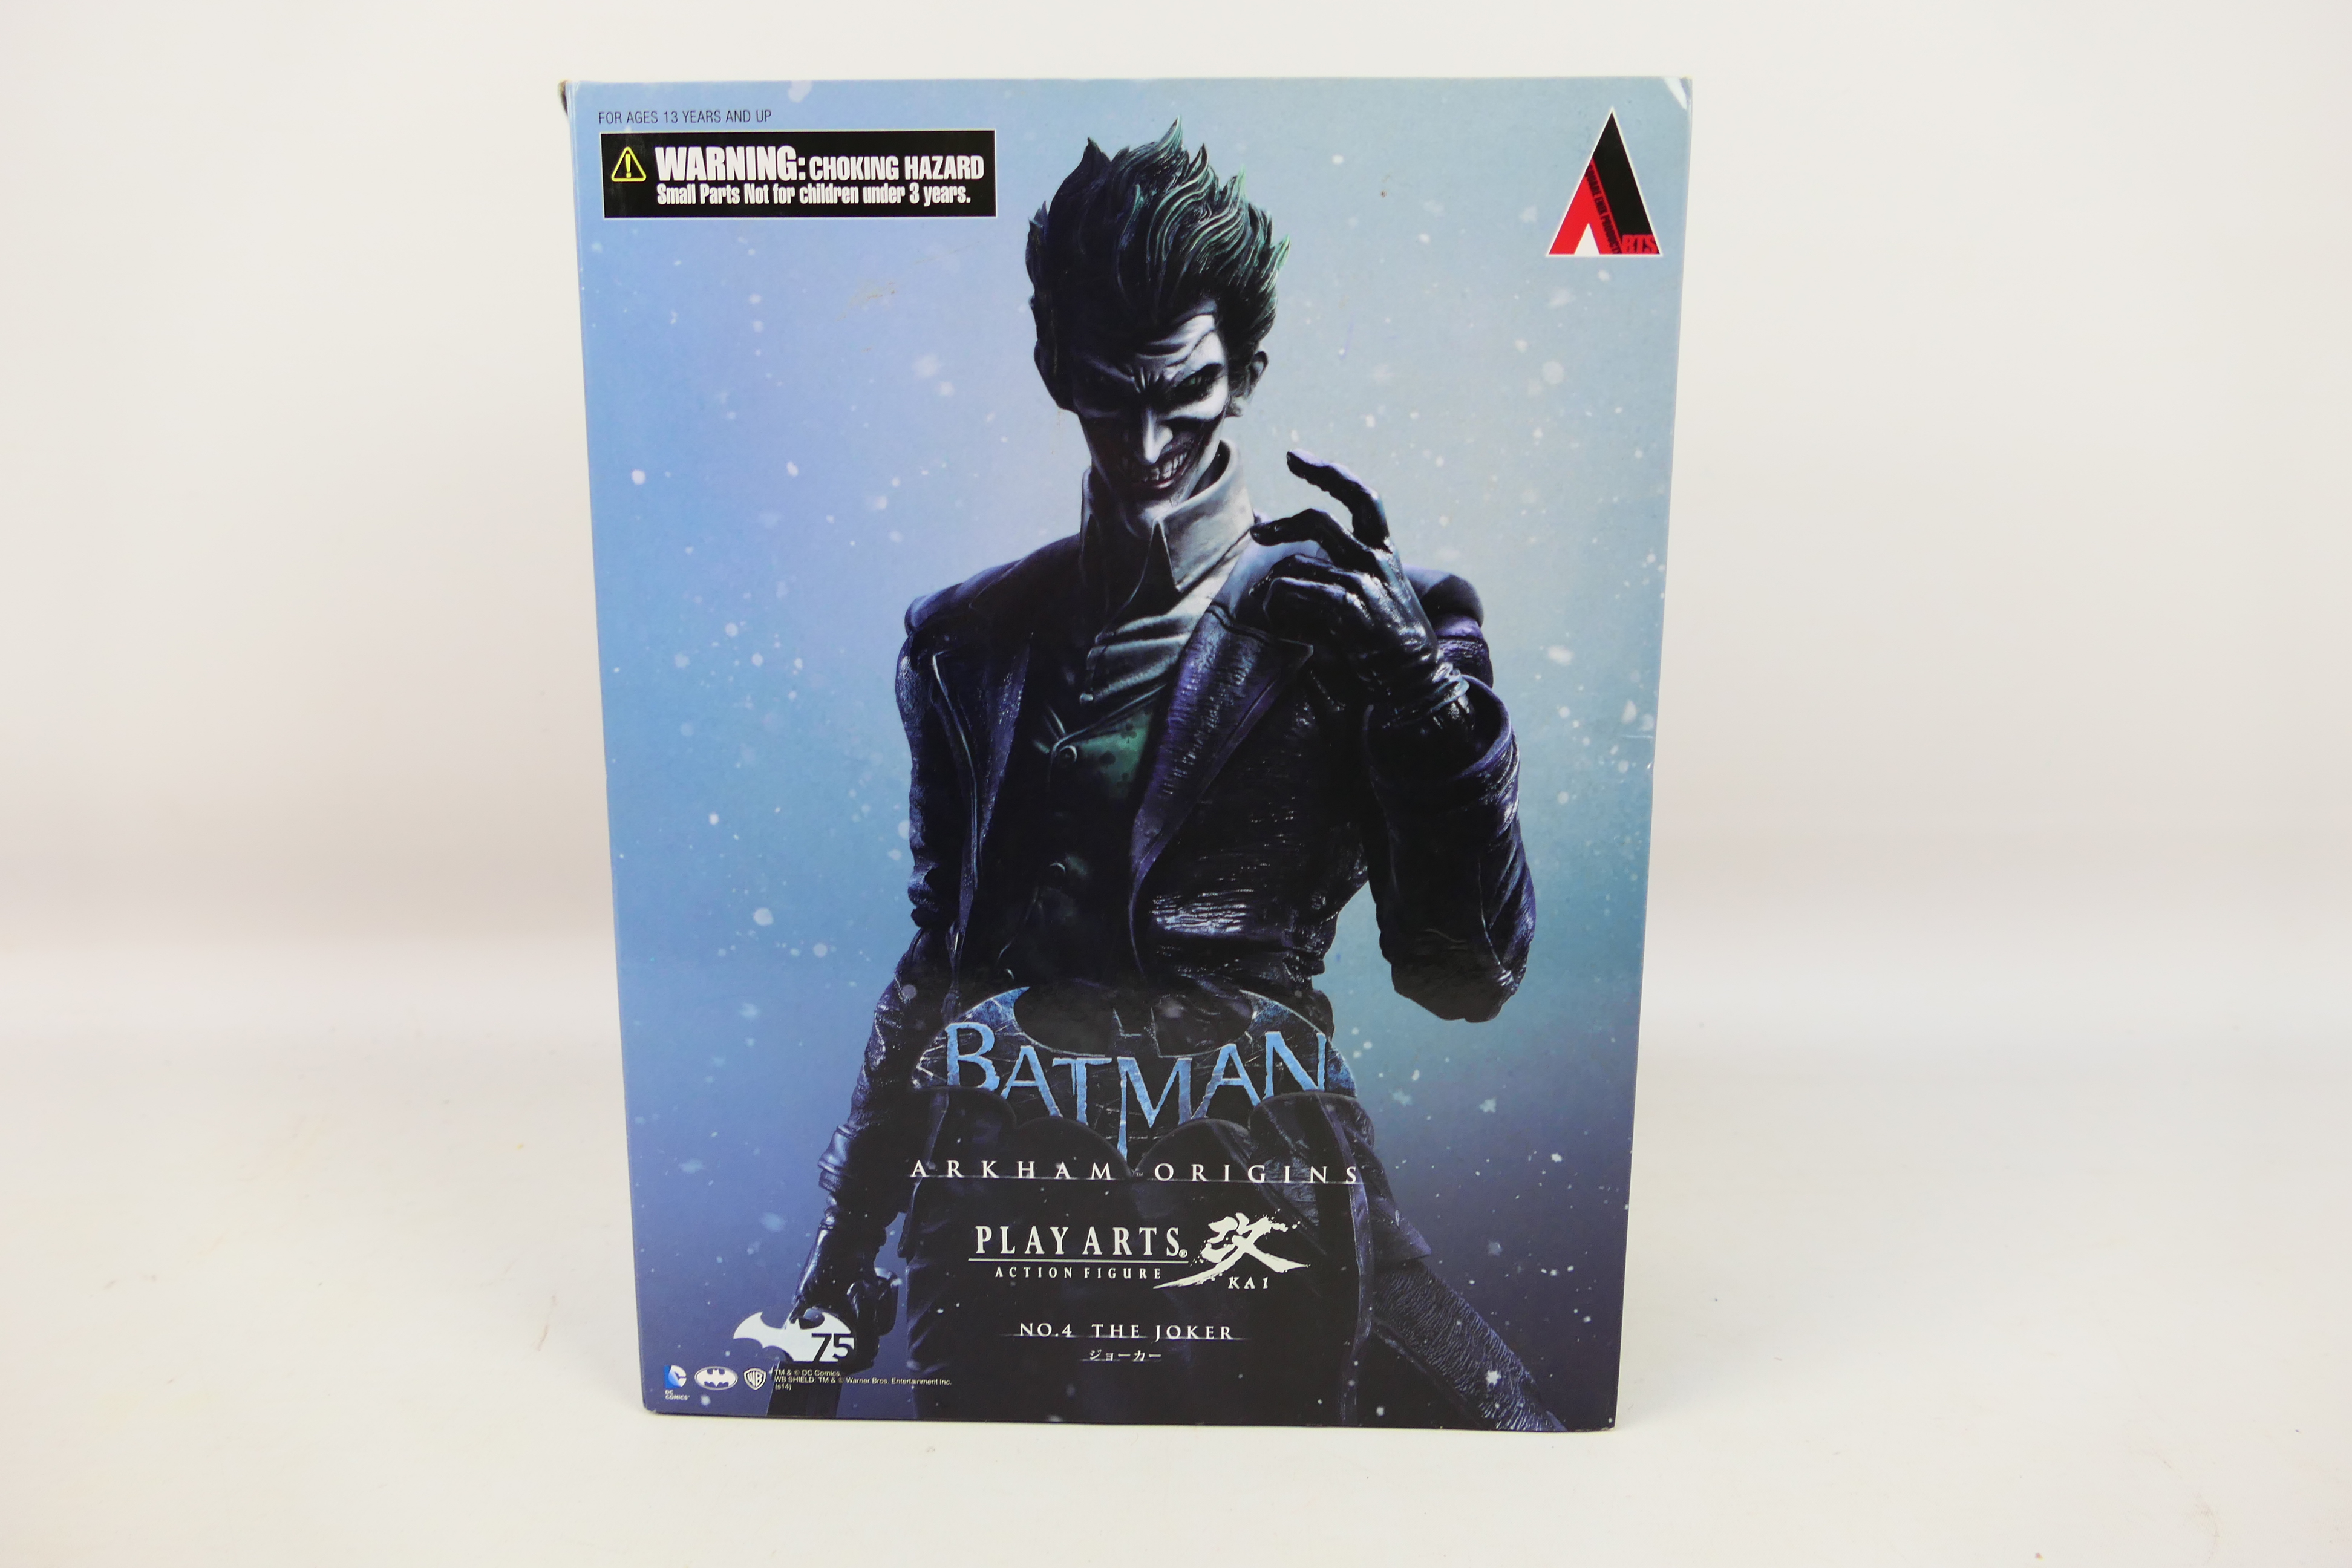 Play Arts Kai - A boxed Play Arts Kai Batman Arkham Origins 'No.4 The Joker' action figure. - Image 2 of 8